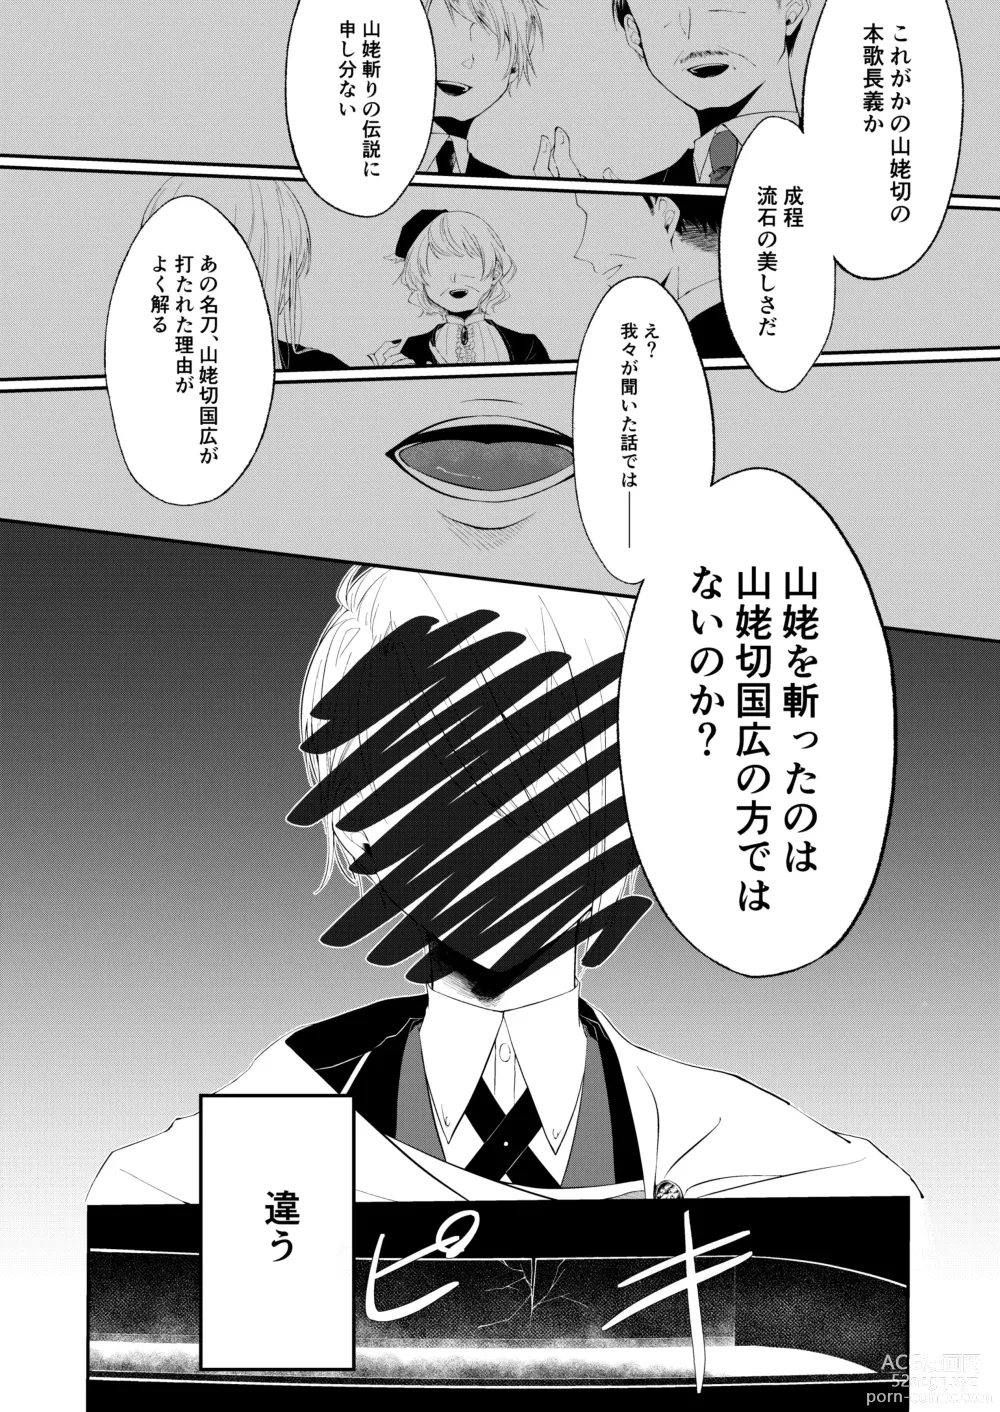 Page 9 of doujinshi Jiko Manzoku no ×××